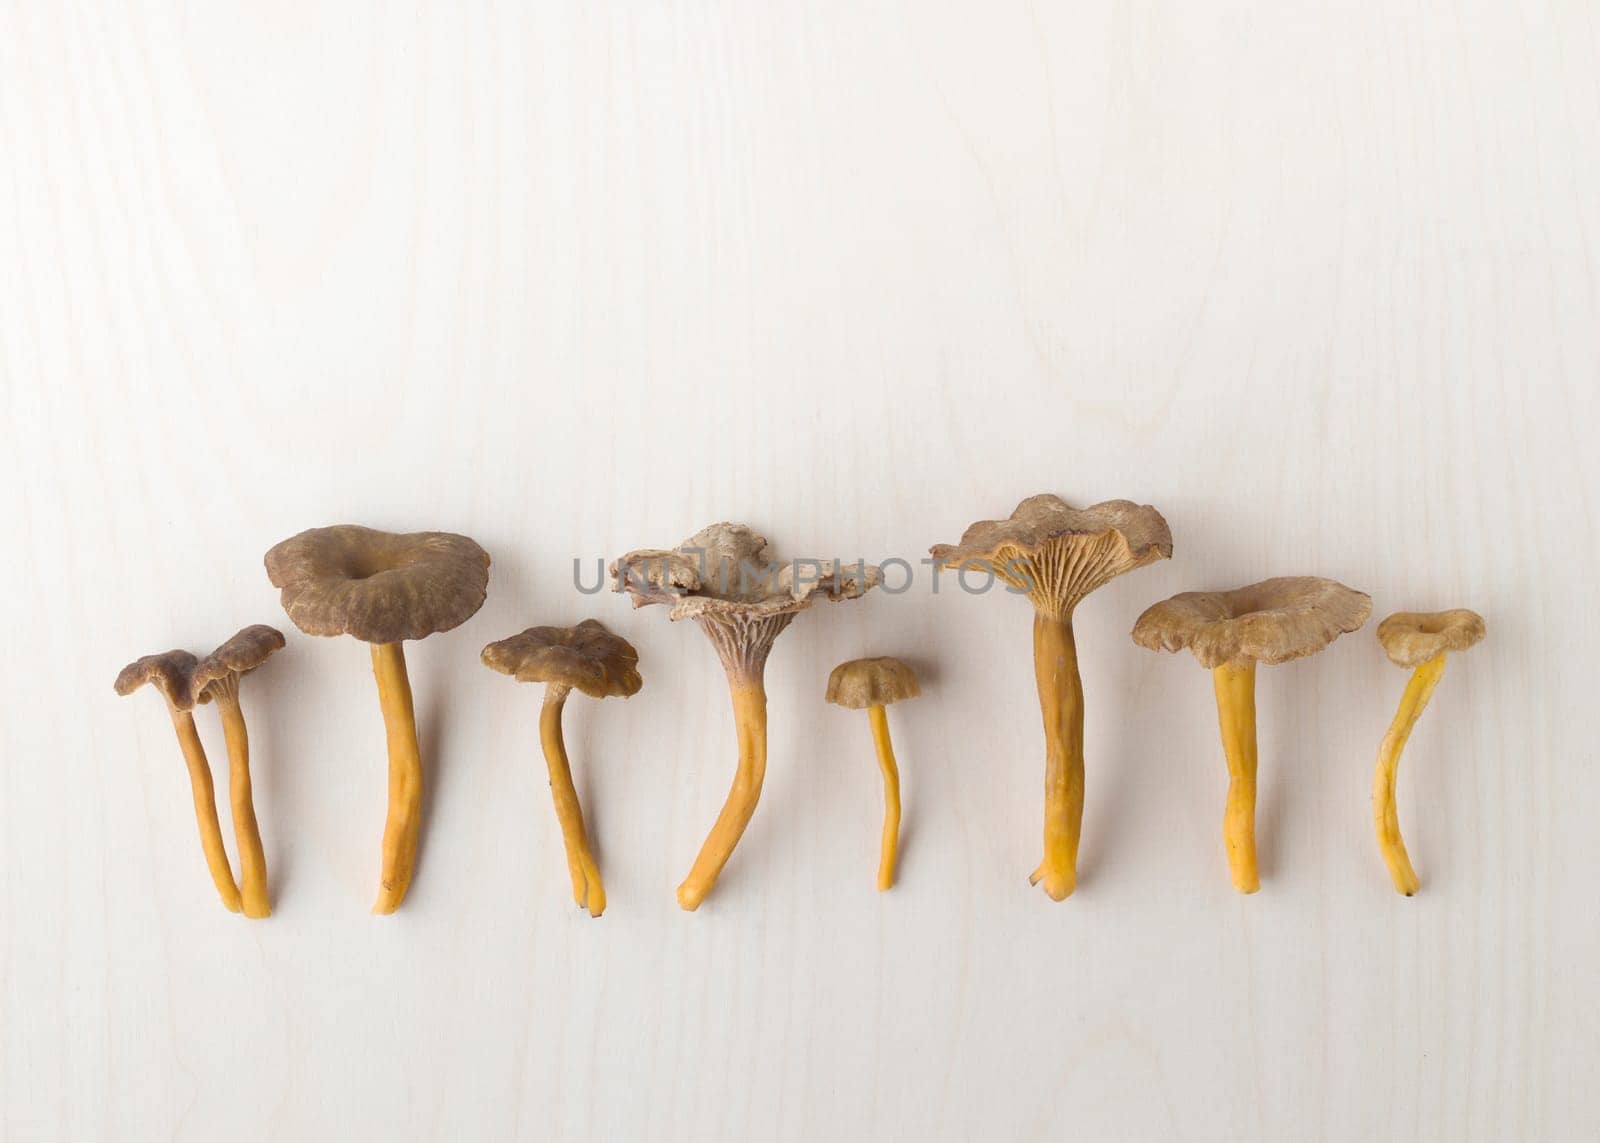 Craterellus cornucopioides, or horn of plenty, trumpet chanterelle mushroom, edible on wooden background.